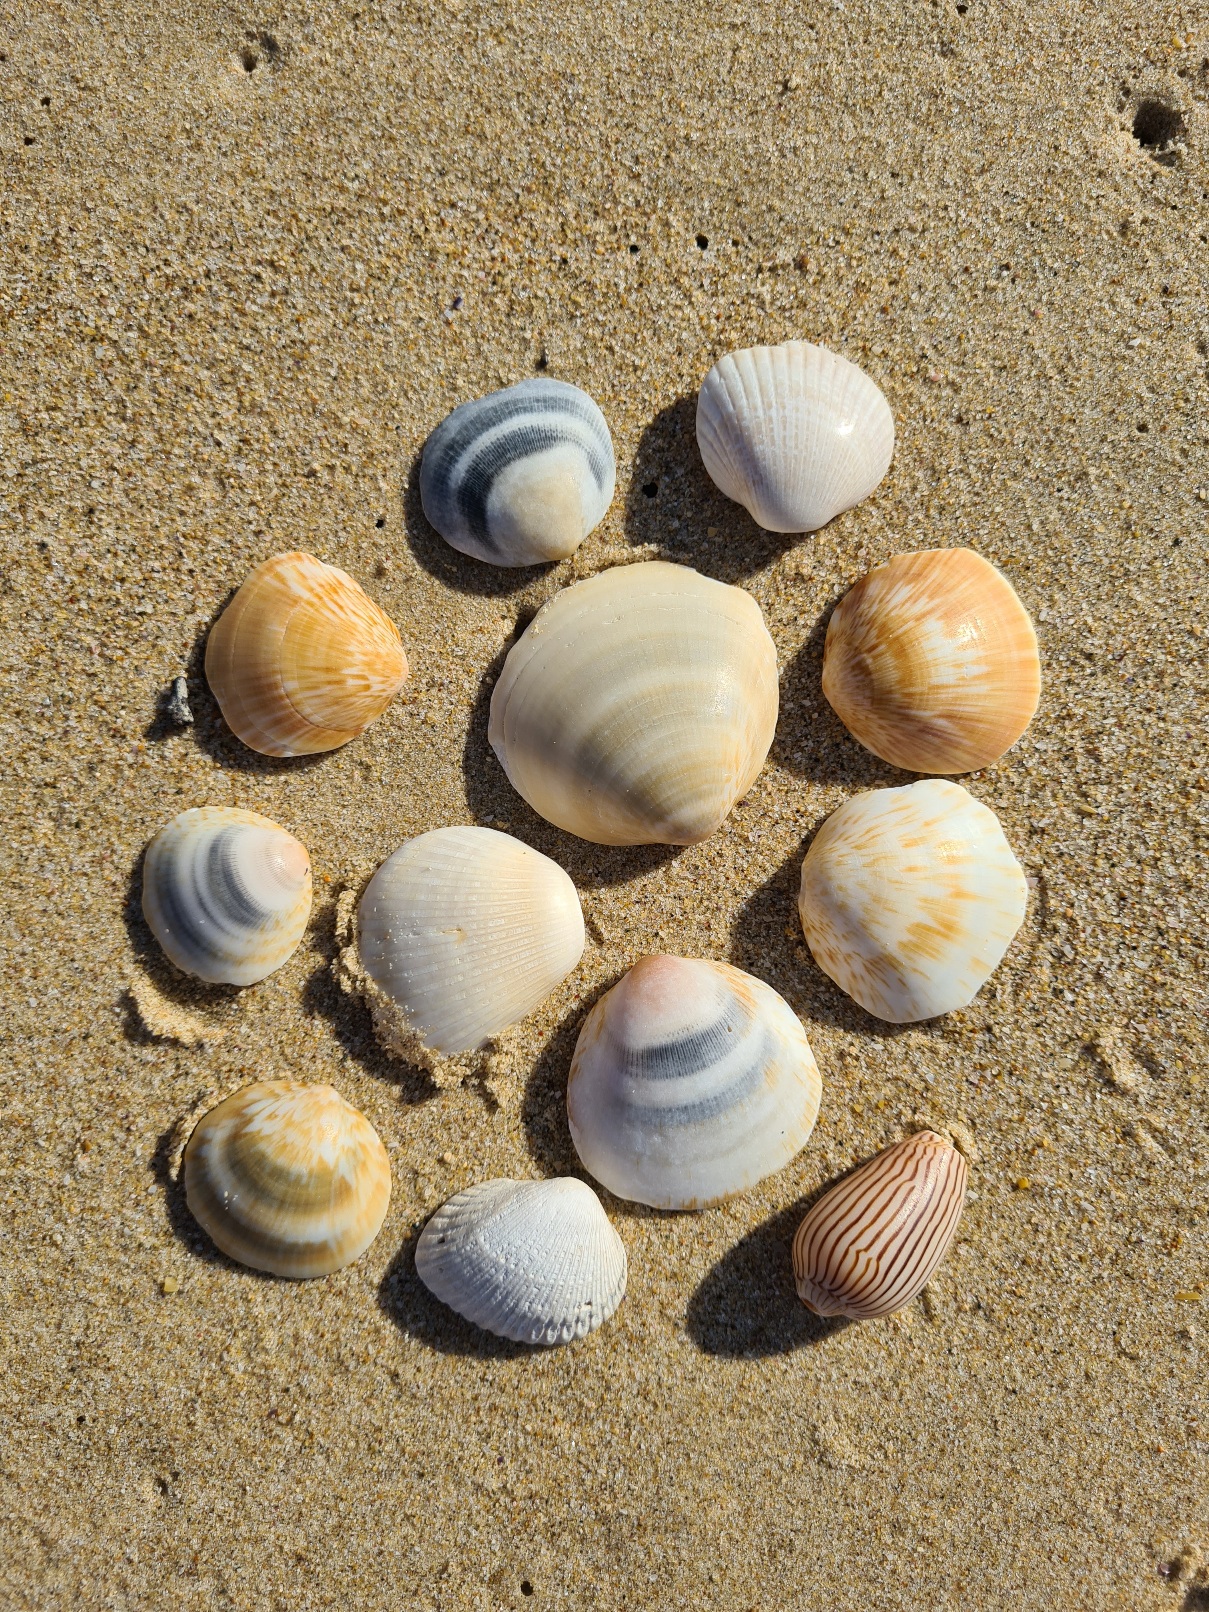 Pippi shells on the beach